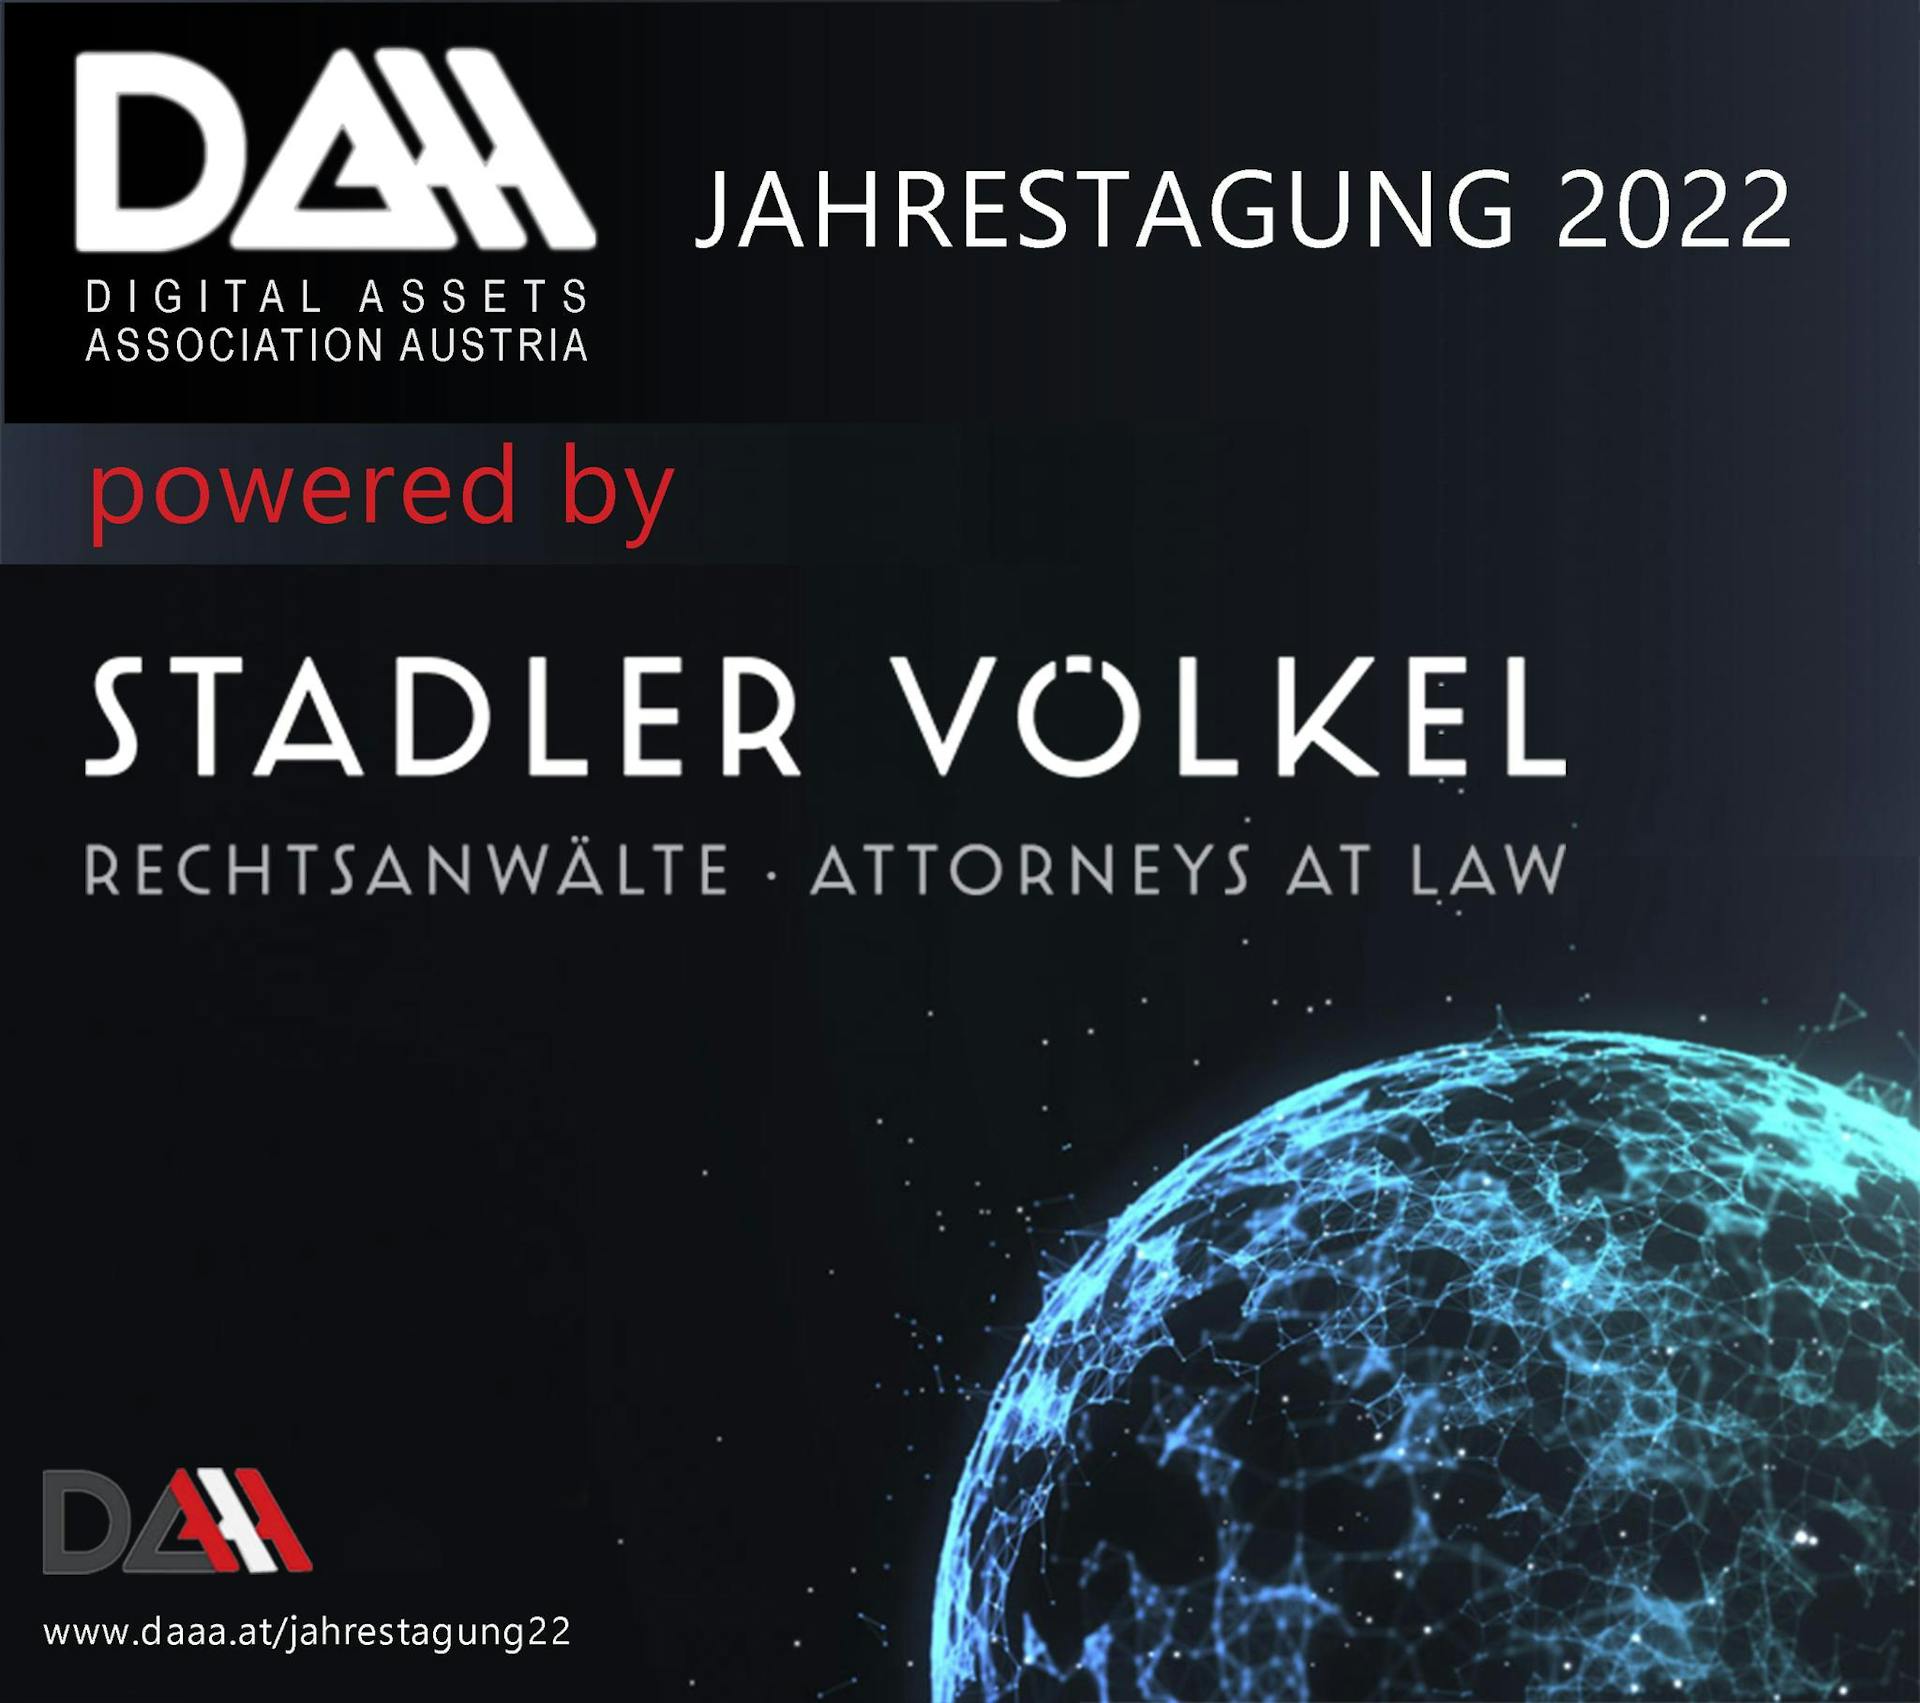 Austria as a blockchain frontrunner: Annual Conference of the Digital Assets Association Austria (DAAA)